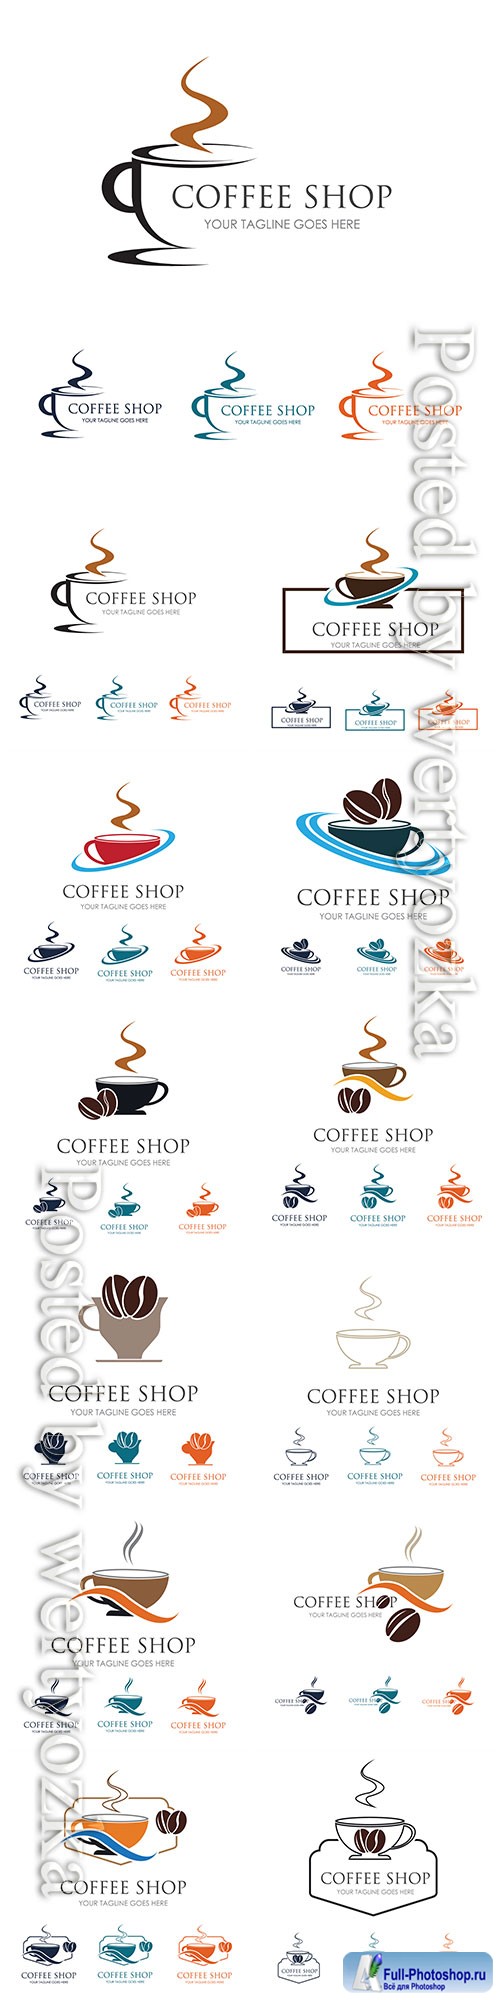 Coffee shop vector logo illustrations